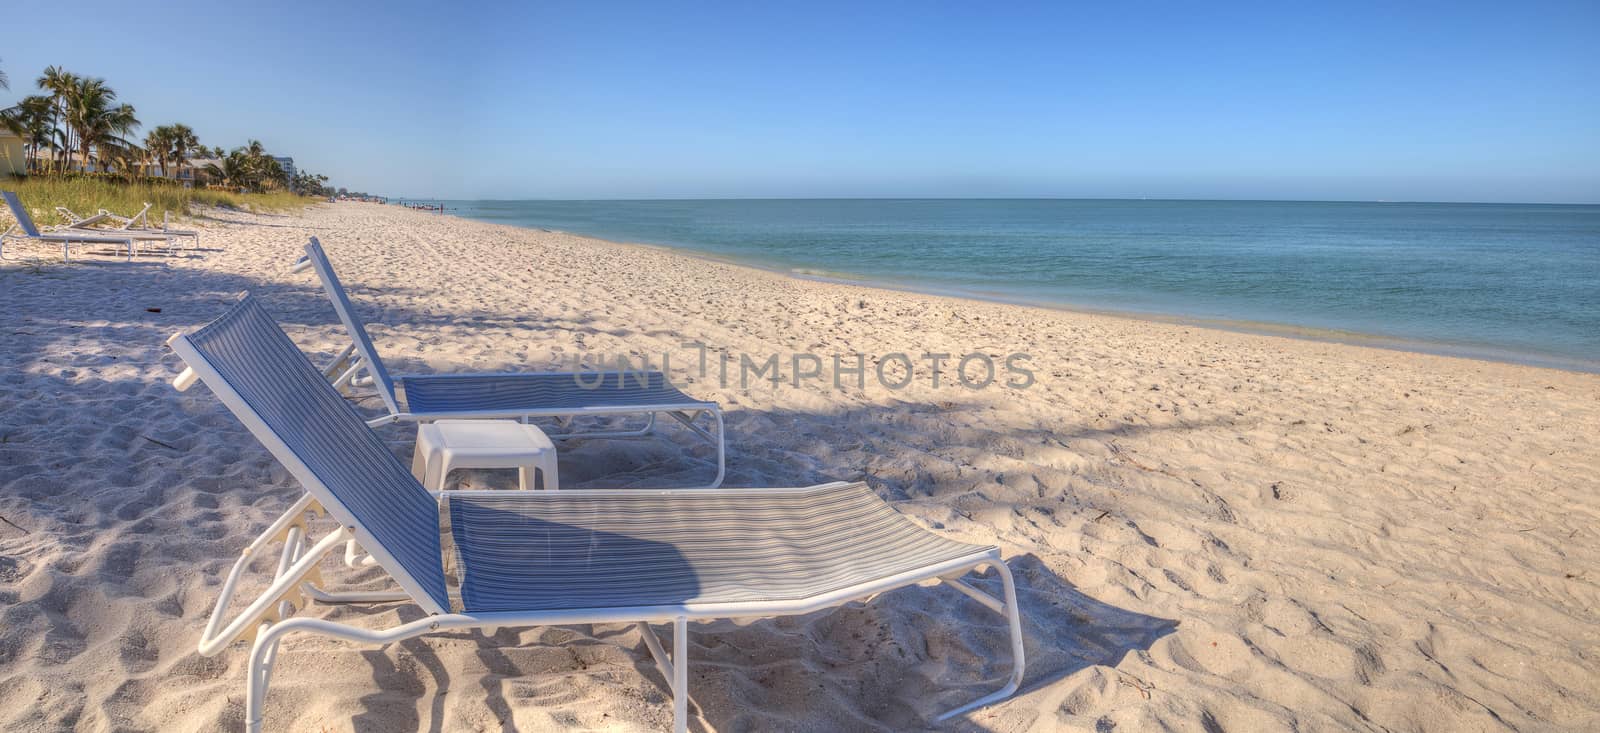 Two beach chairs under a Clear blue sky over Lowdermilk Beach by steffstarr